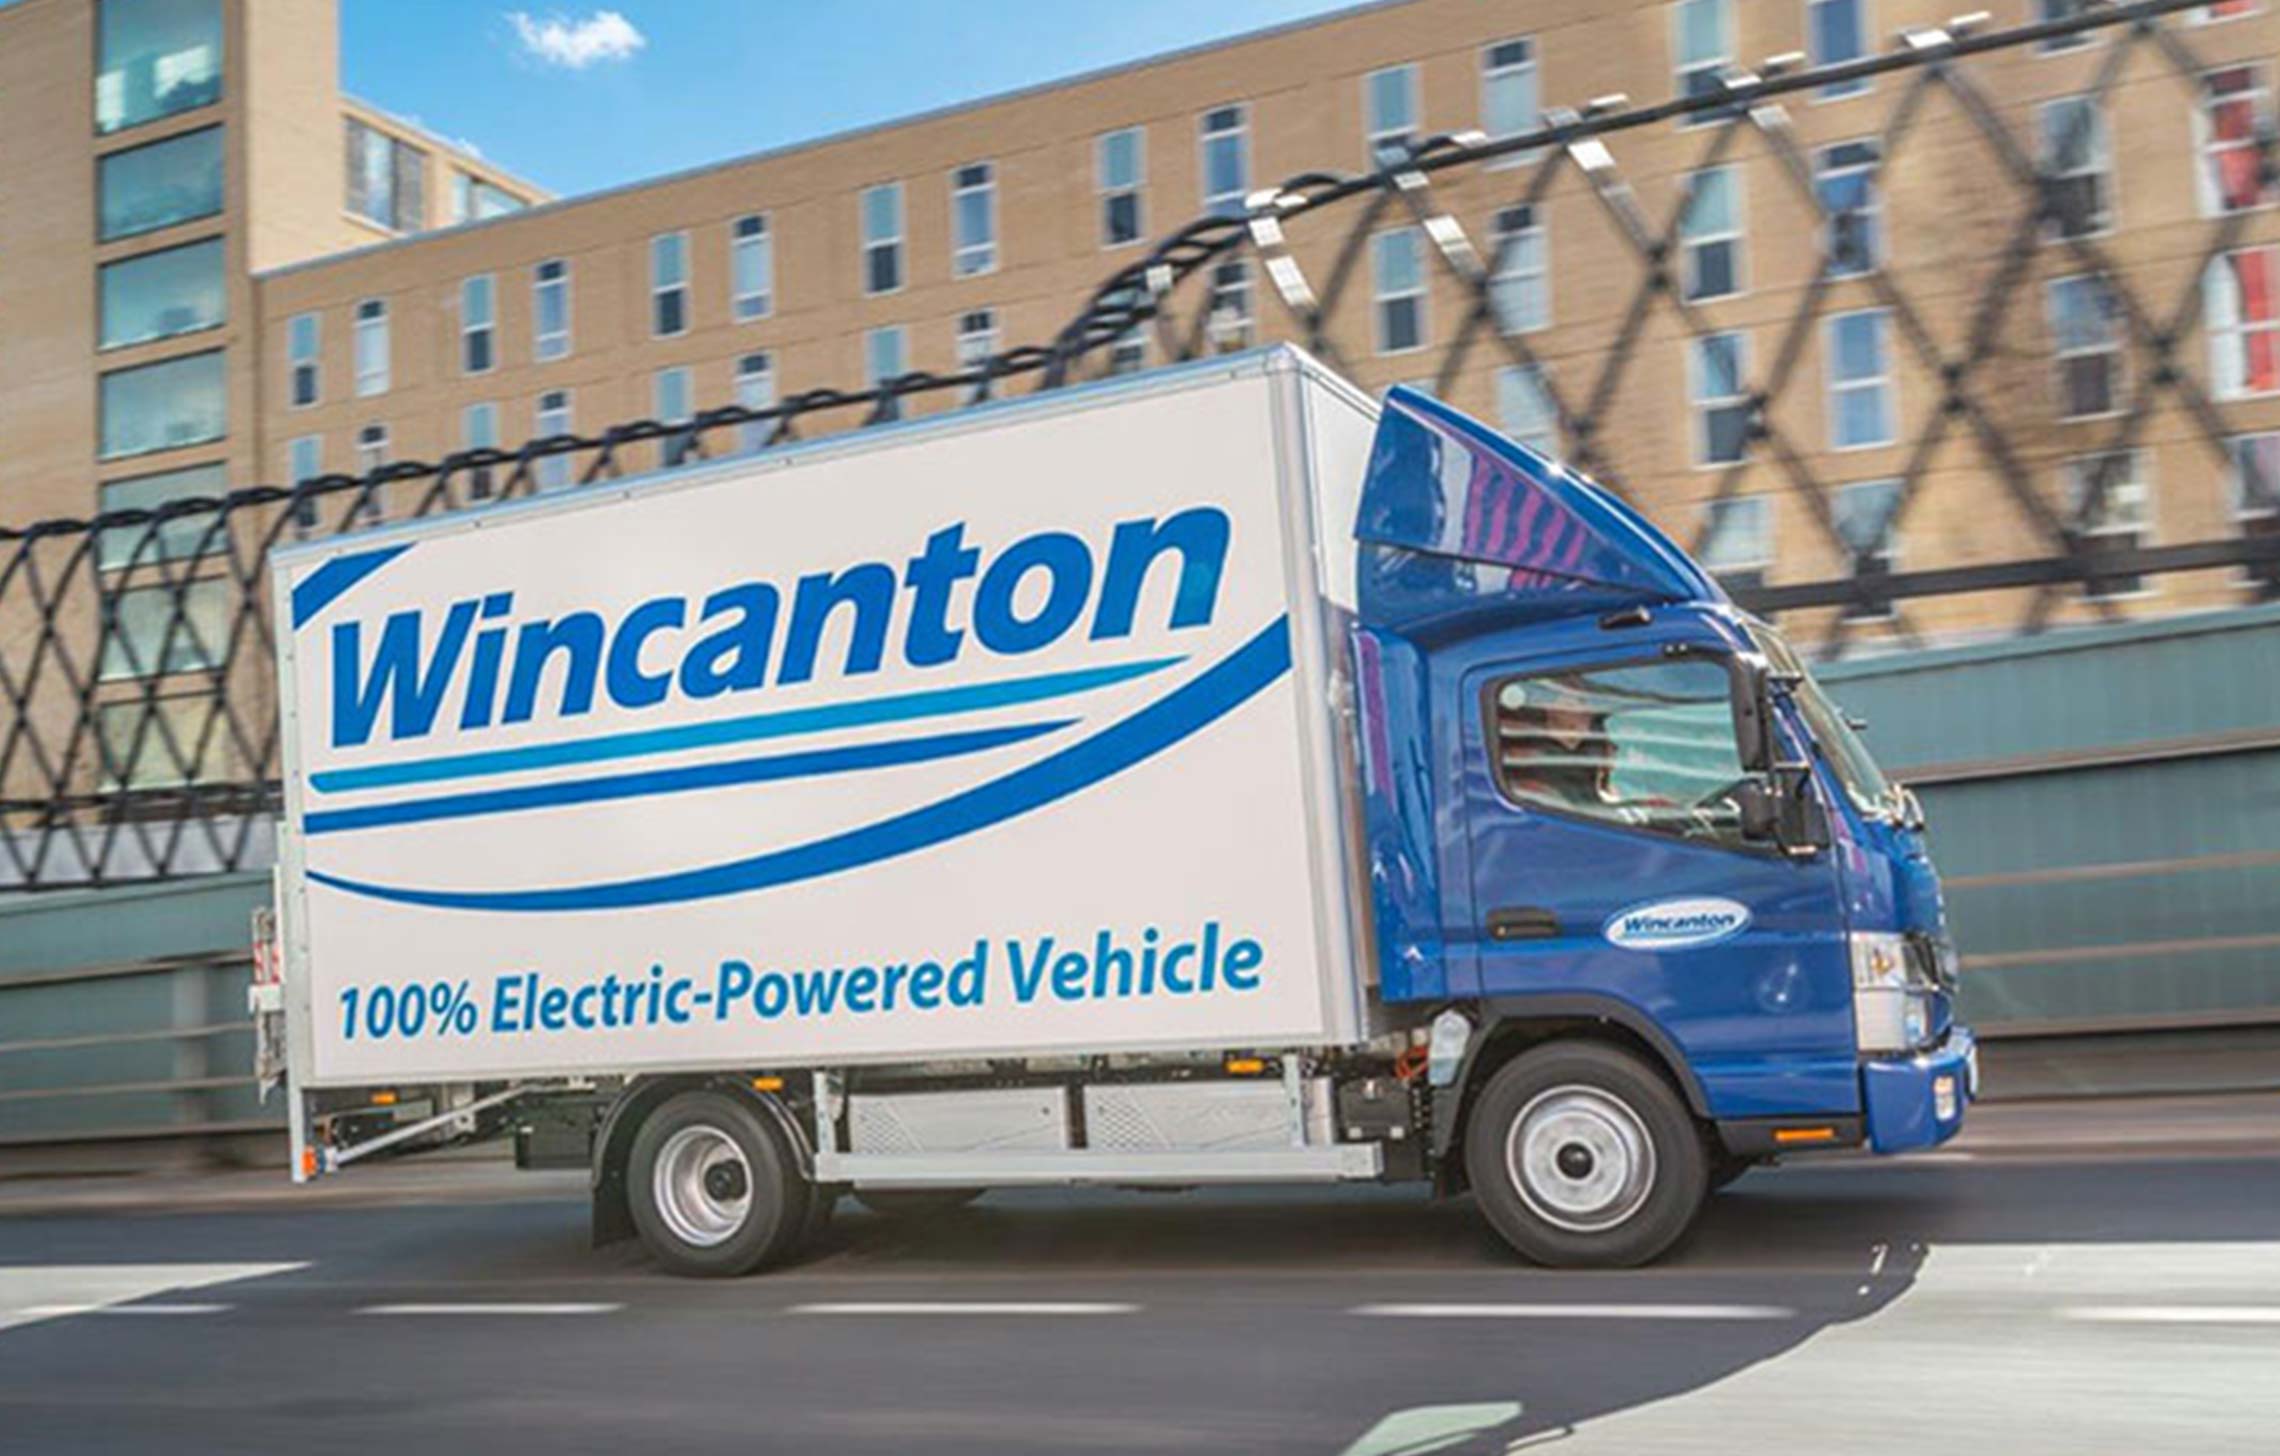 Wincanton truck